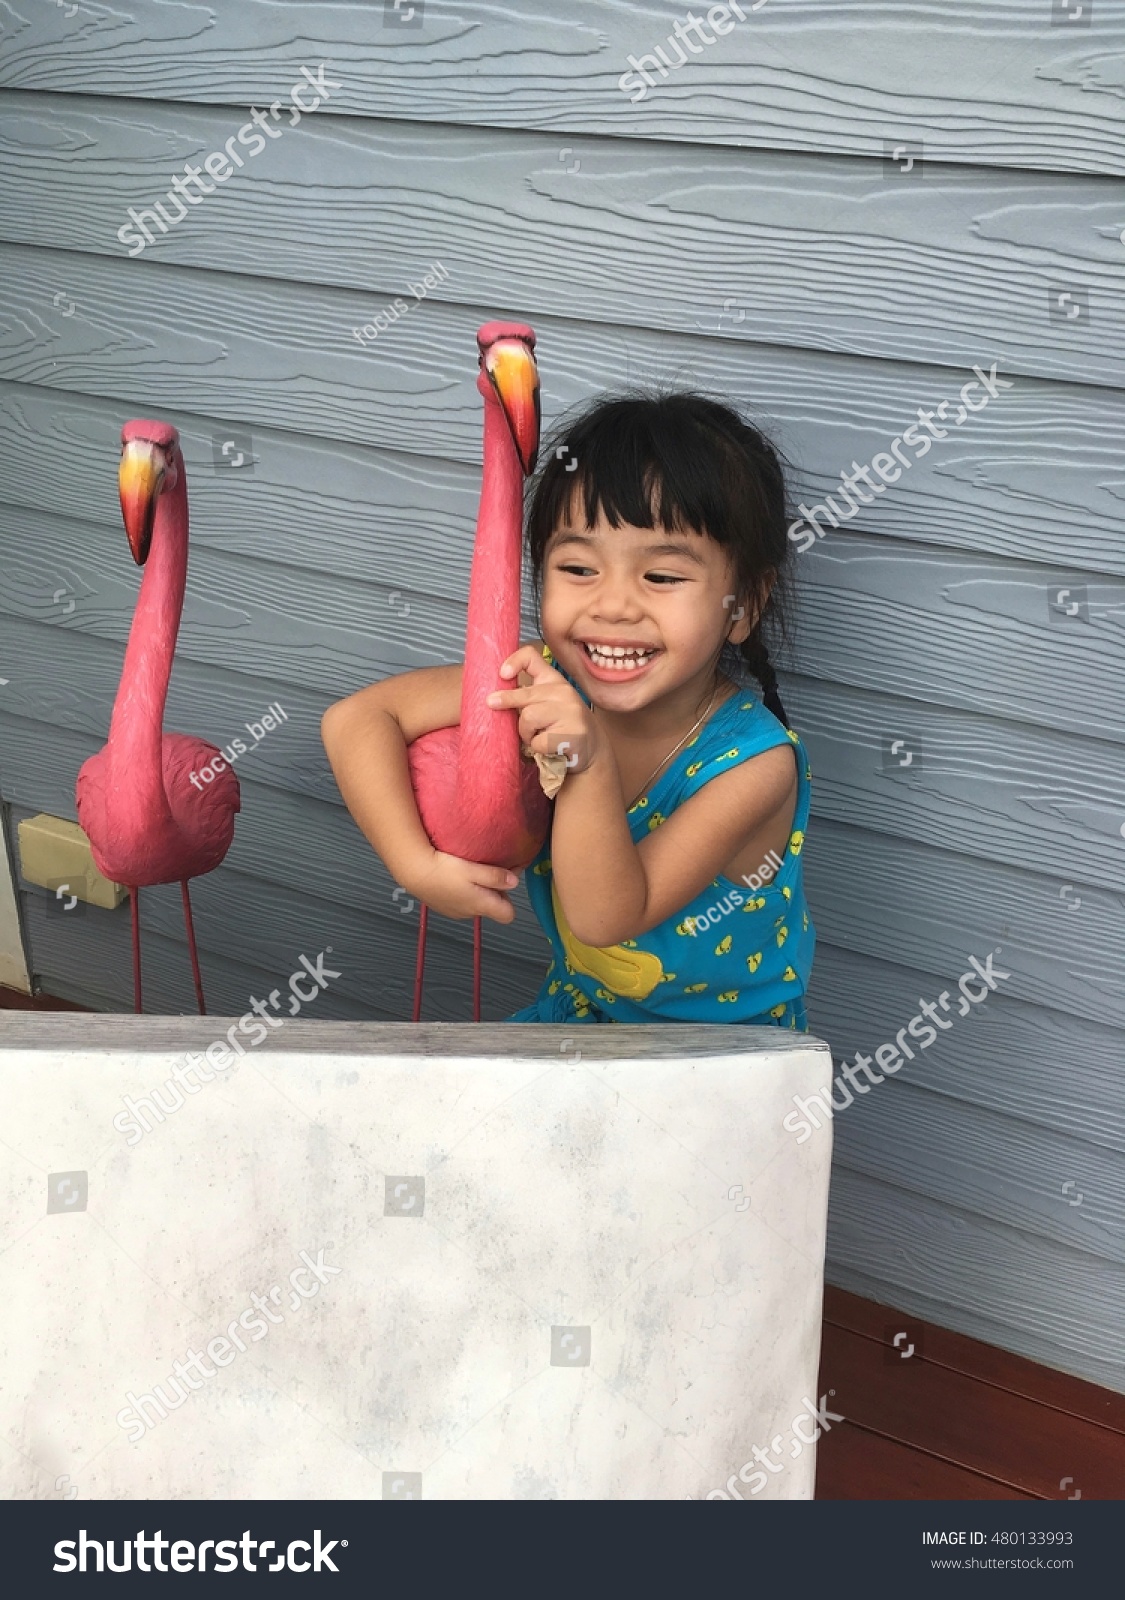 The girl Asia hugging bird doll #480133993